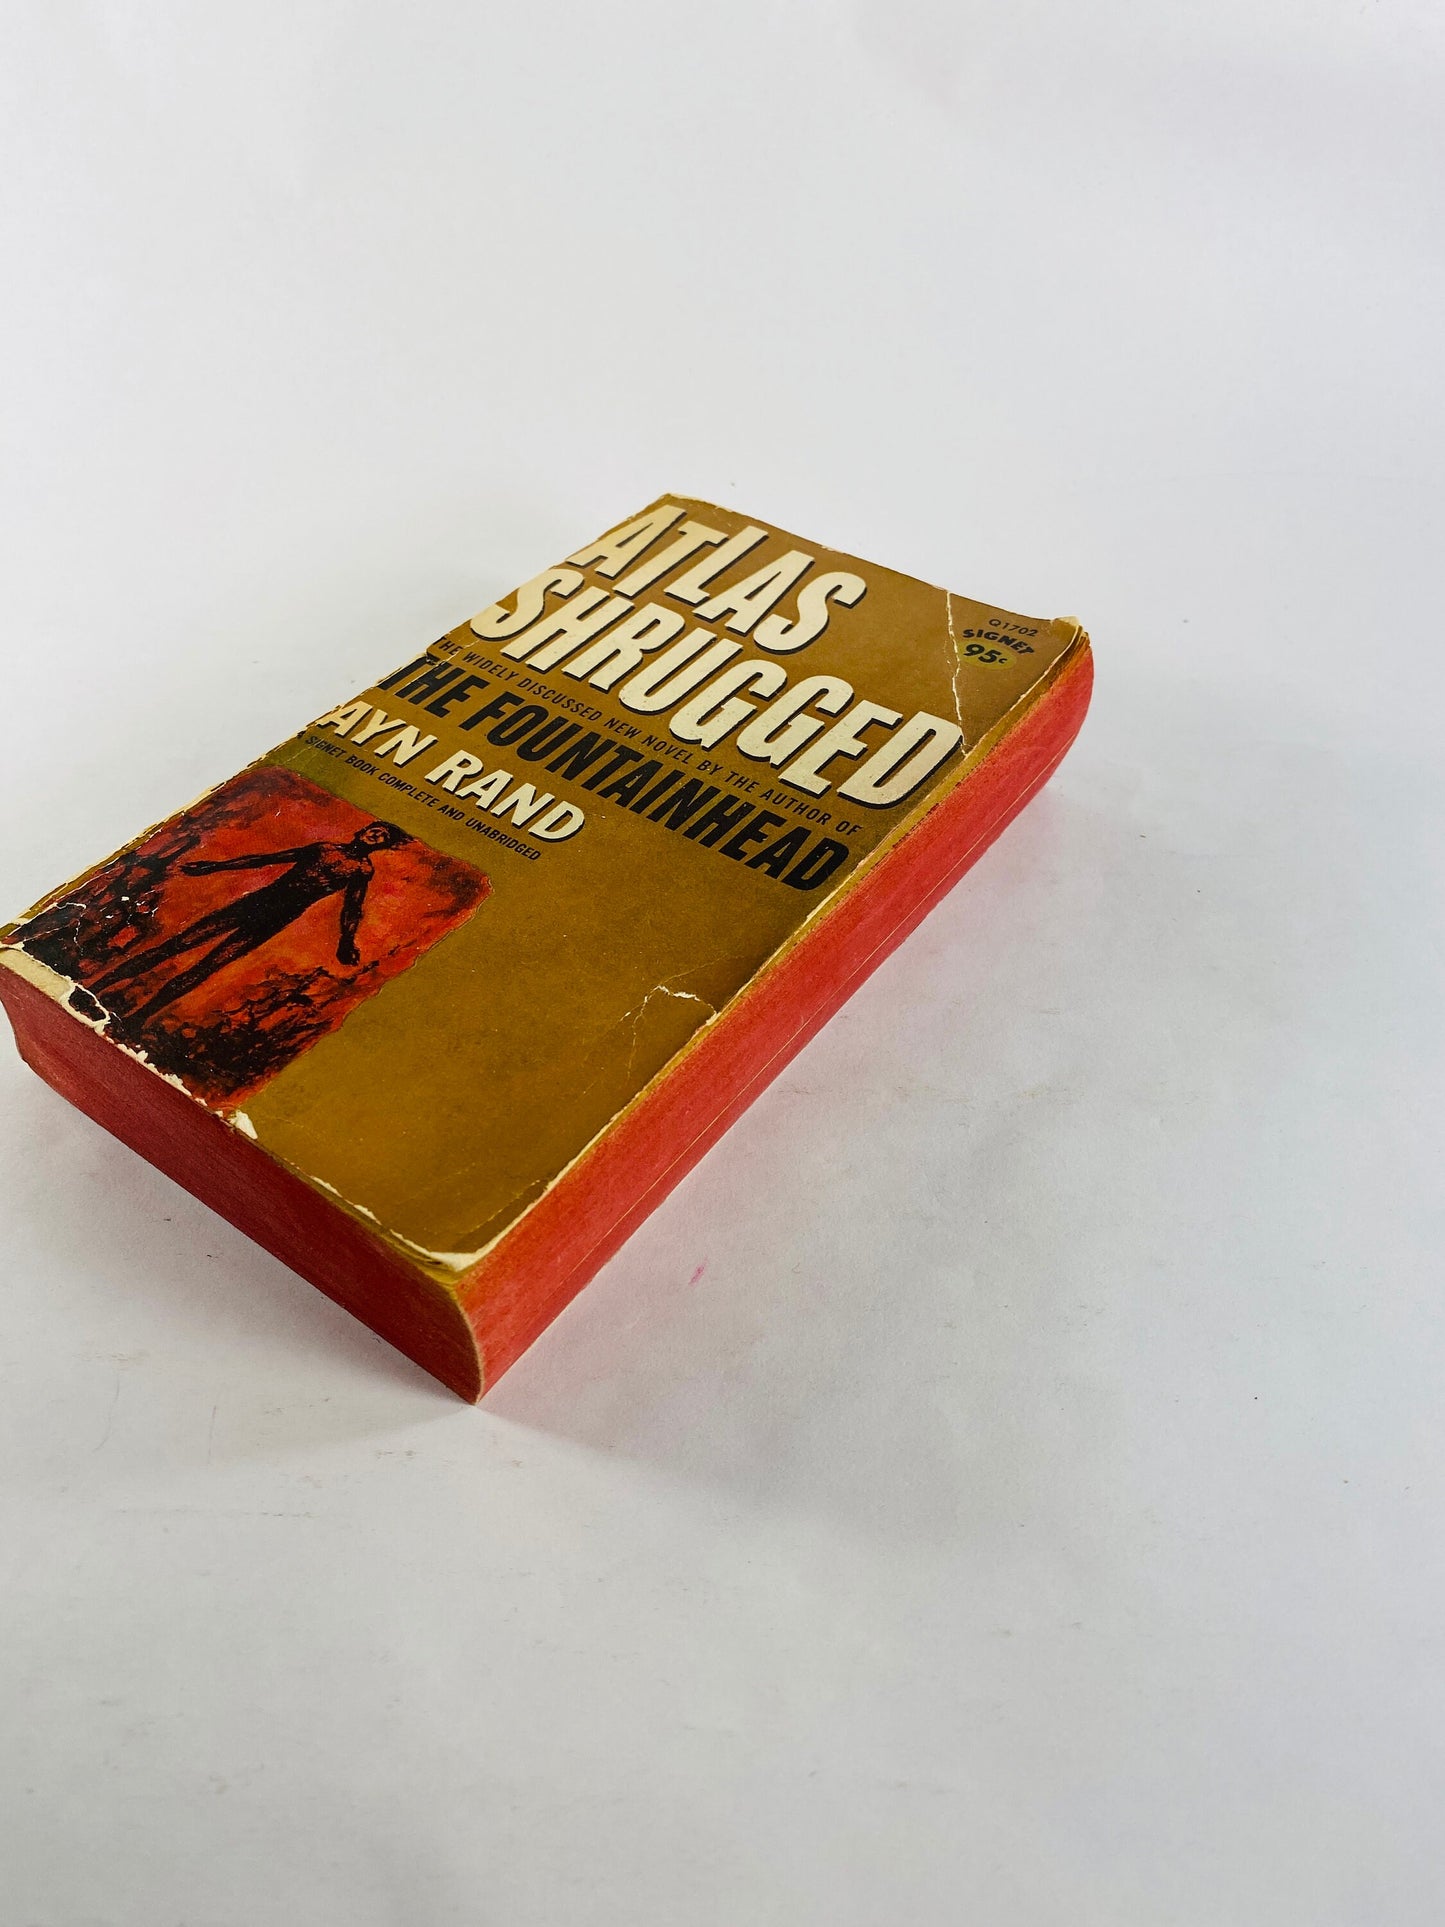 1964 Atlas Shrugged vintage Signet paperback book by Ayn Rand philosophy Objectivism capitalism